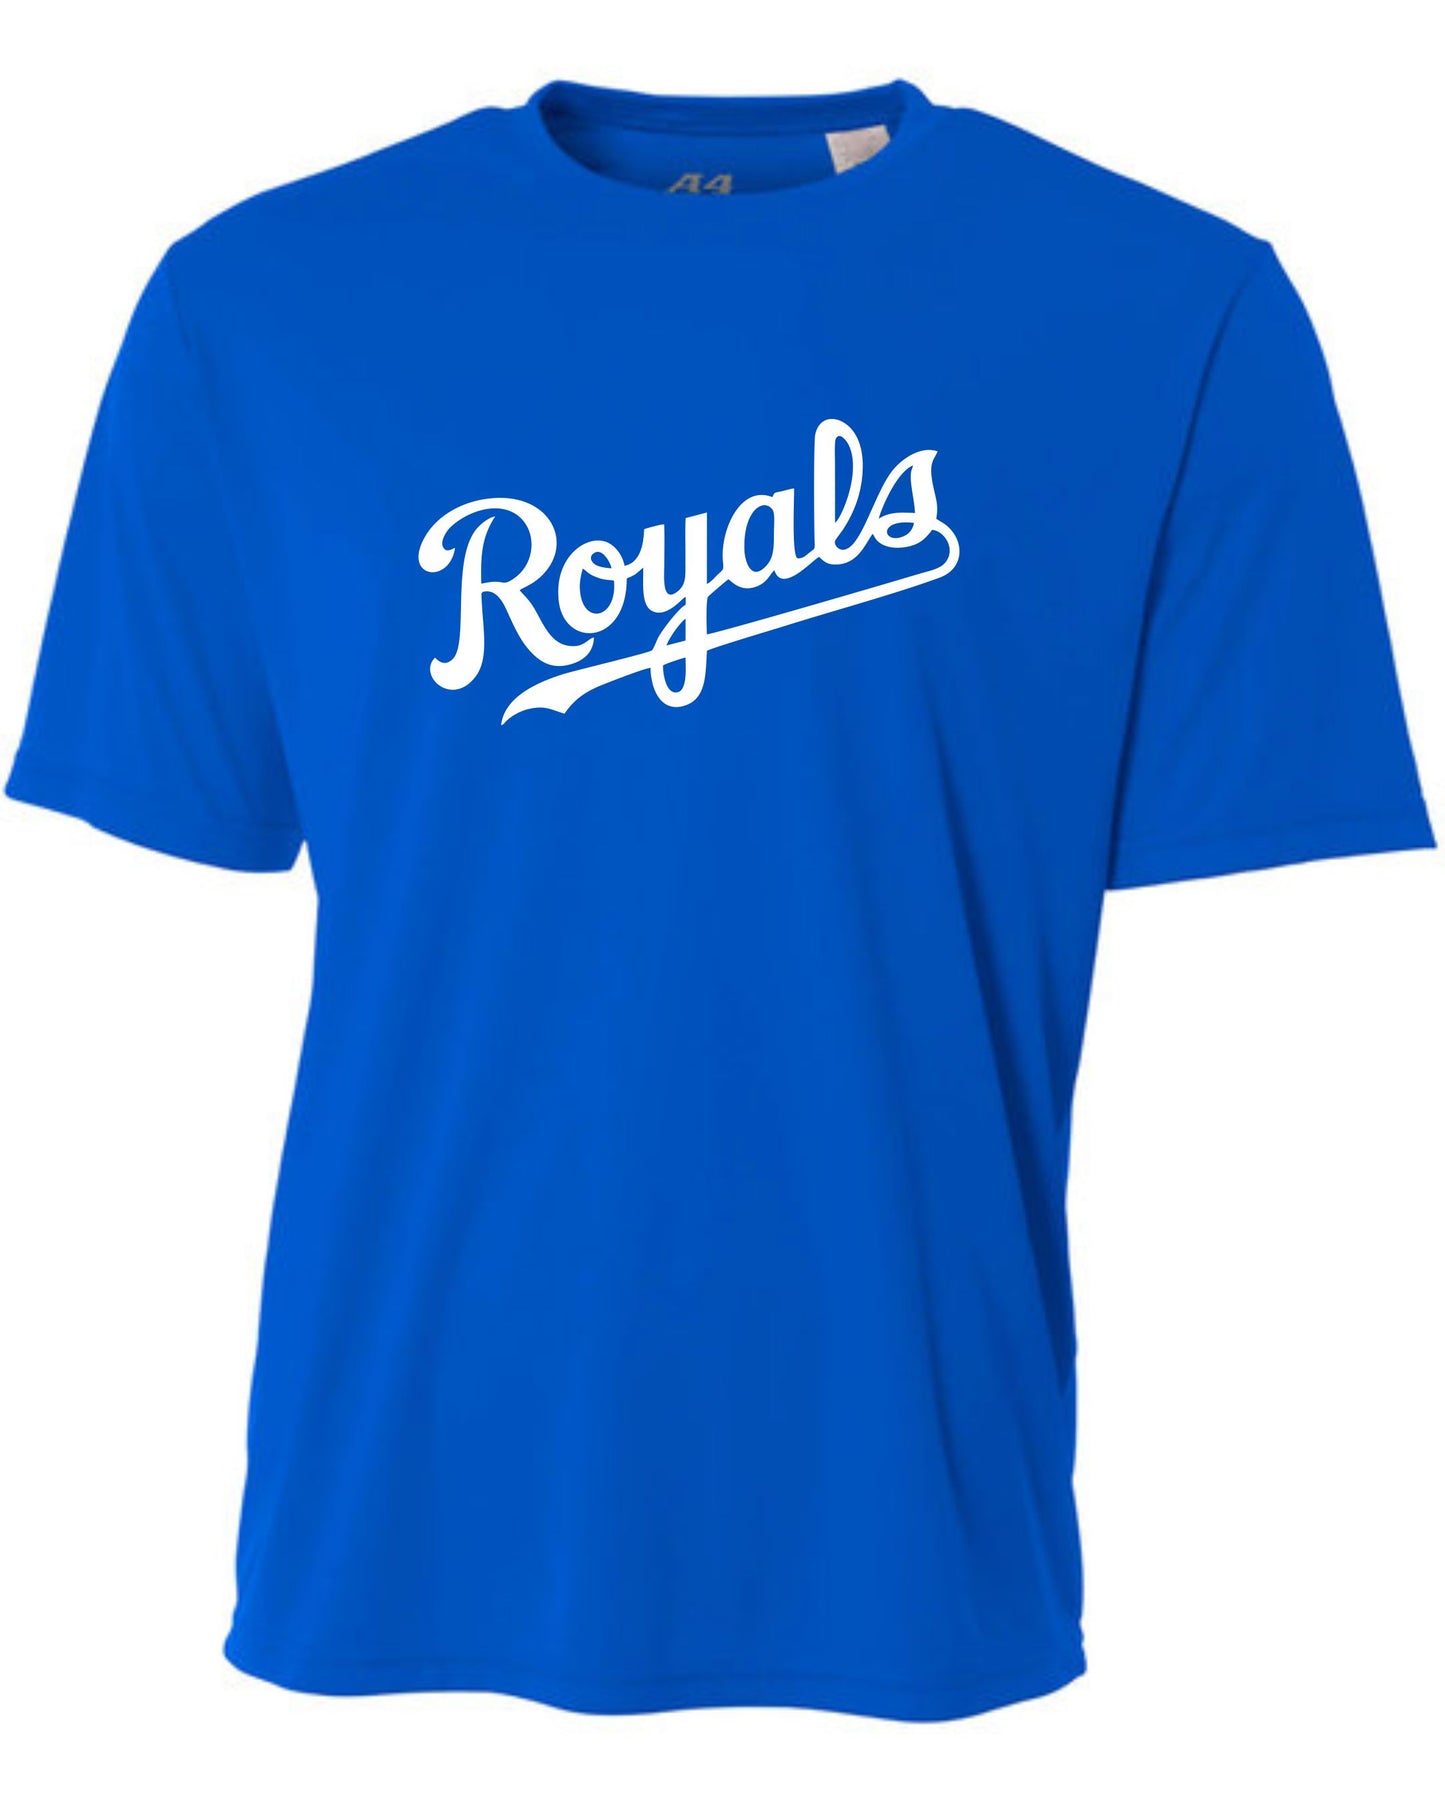 Royals Baseball Dri Fit T-Shirt